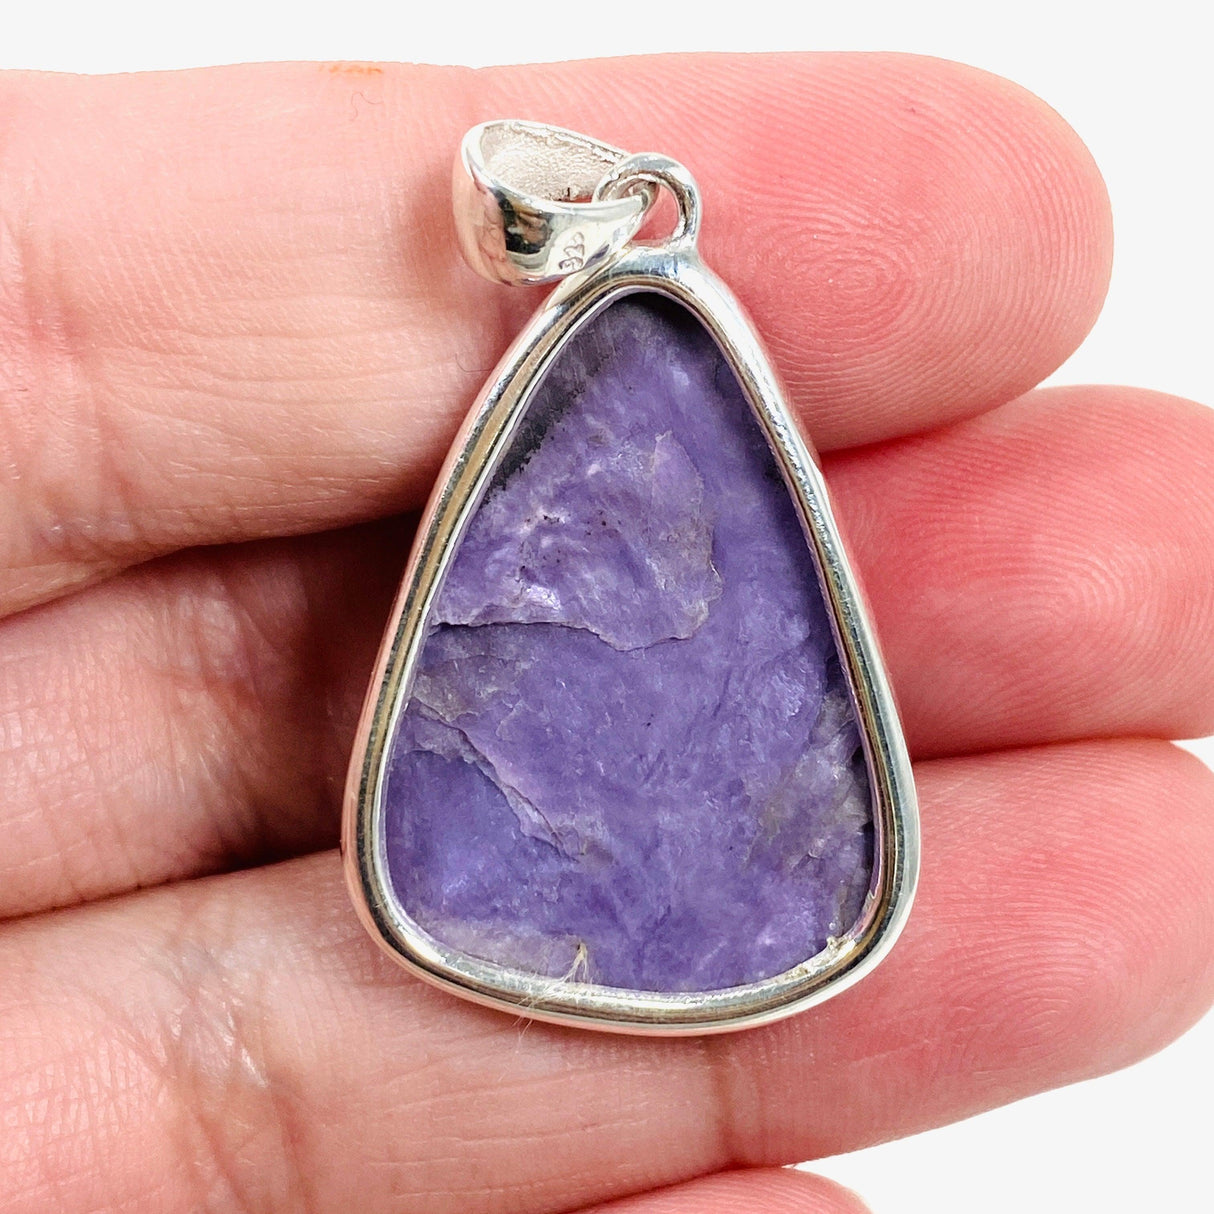 Purple Charoite tear drop pendant in sterling silver sitting in a hand